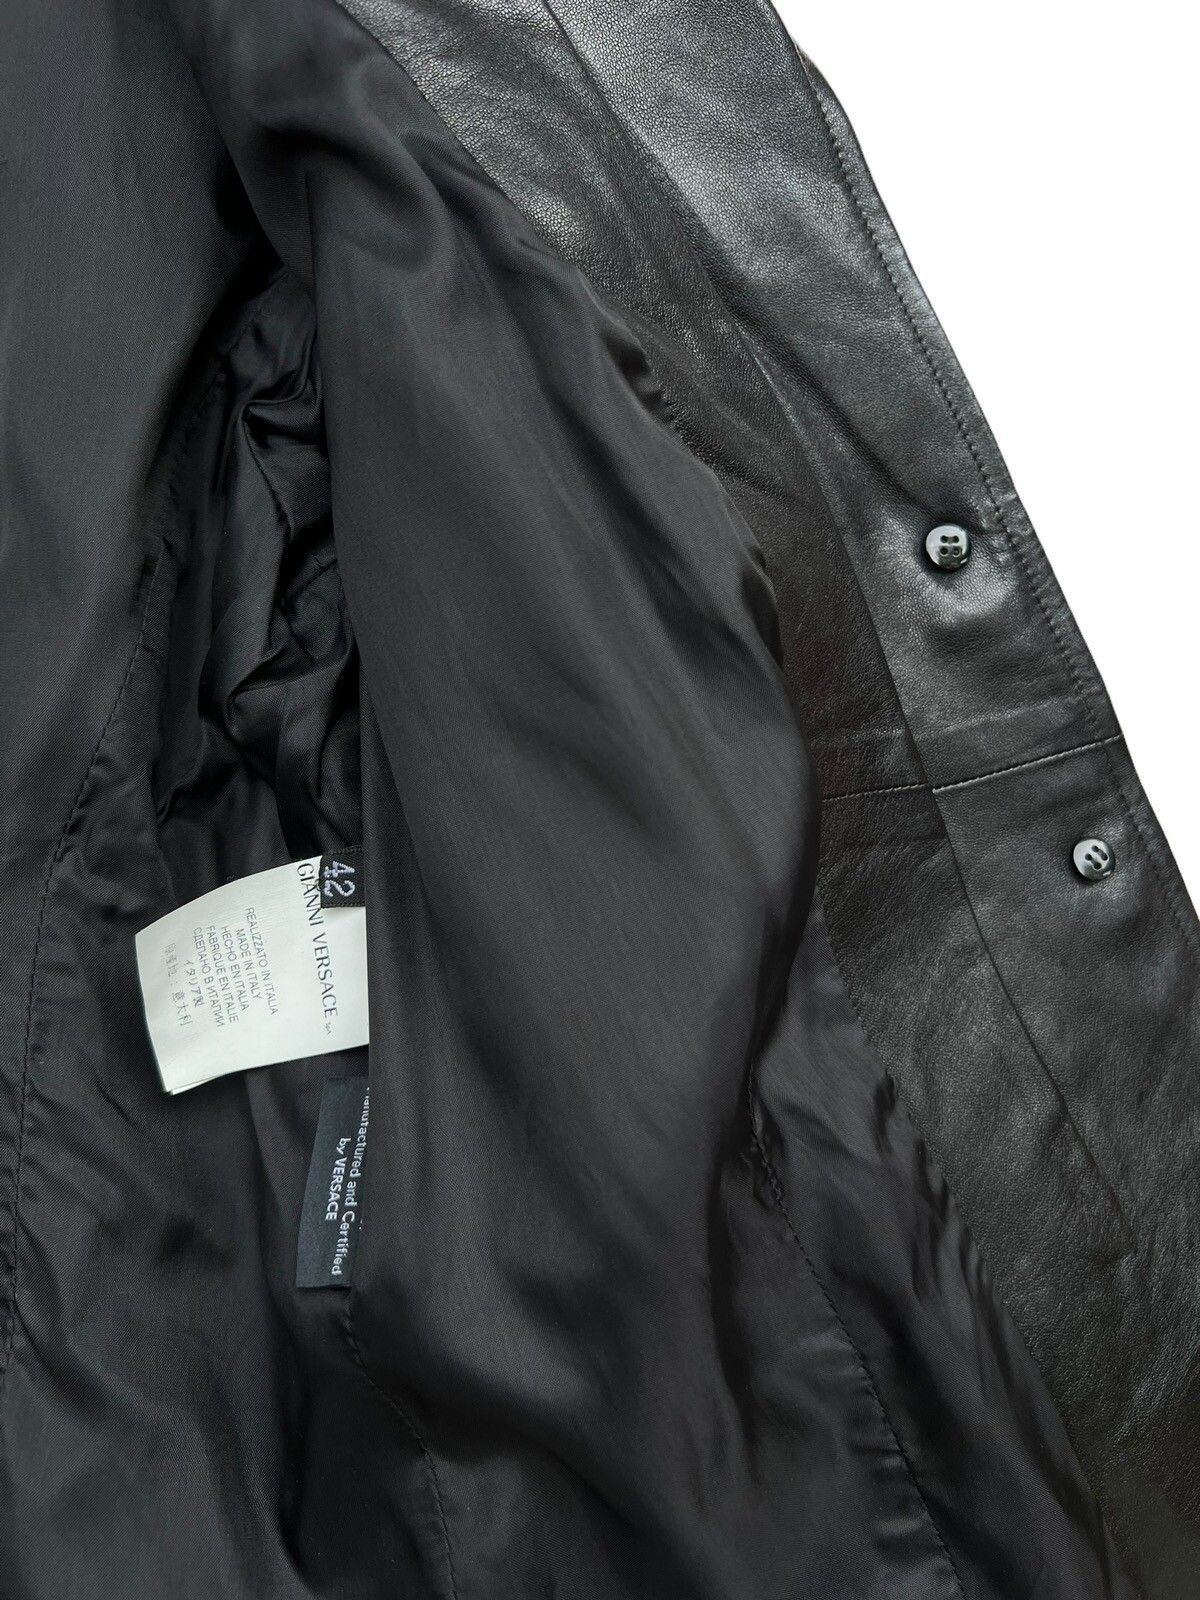 Versace Leather Jacket - 10